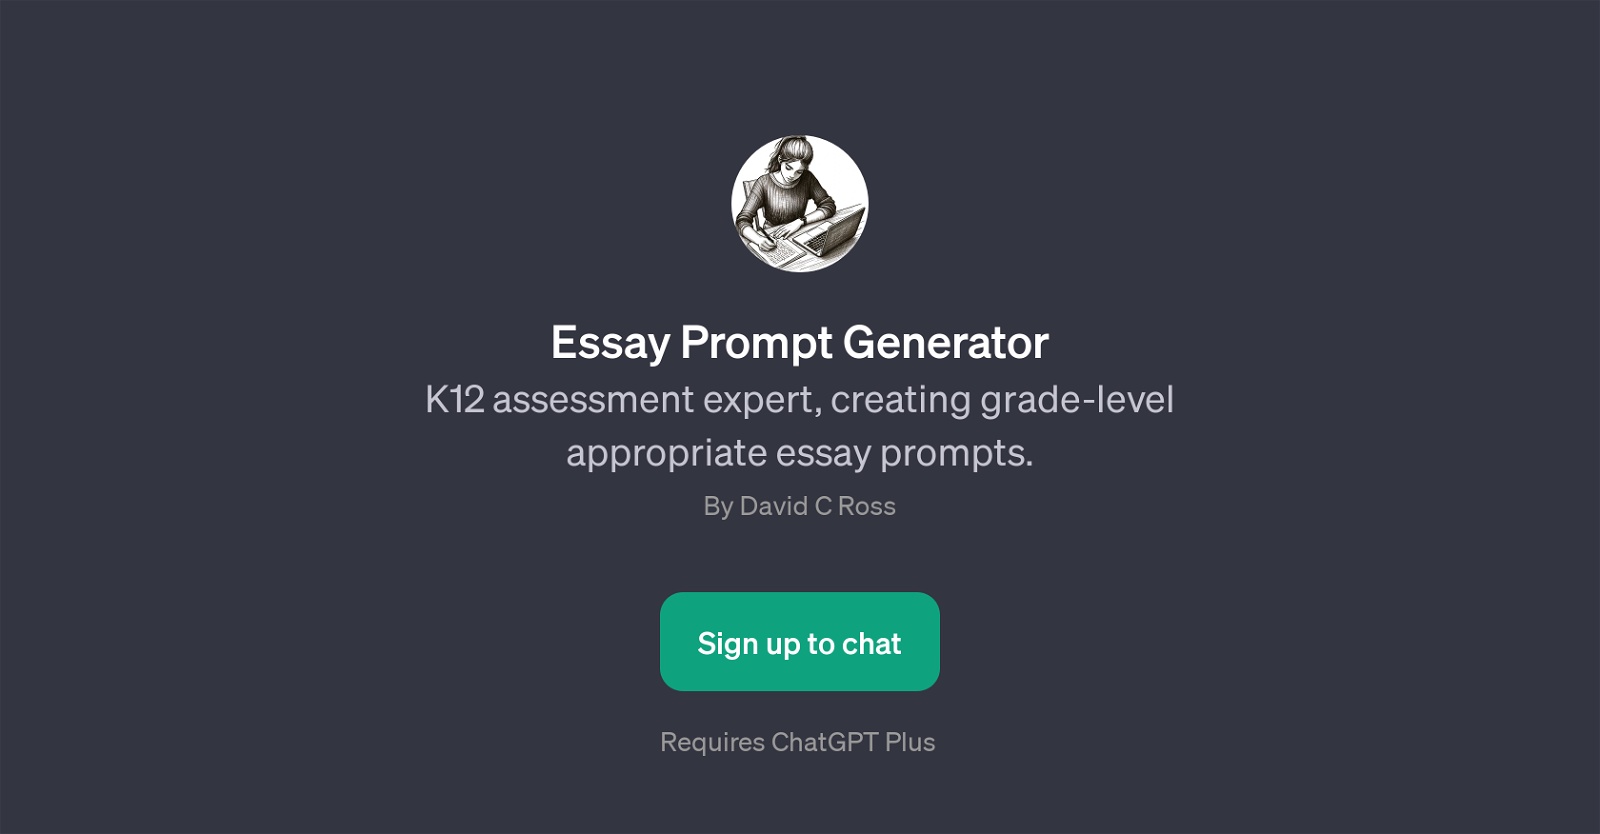 Essay Prompt Generator website